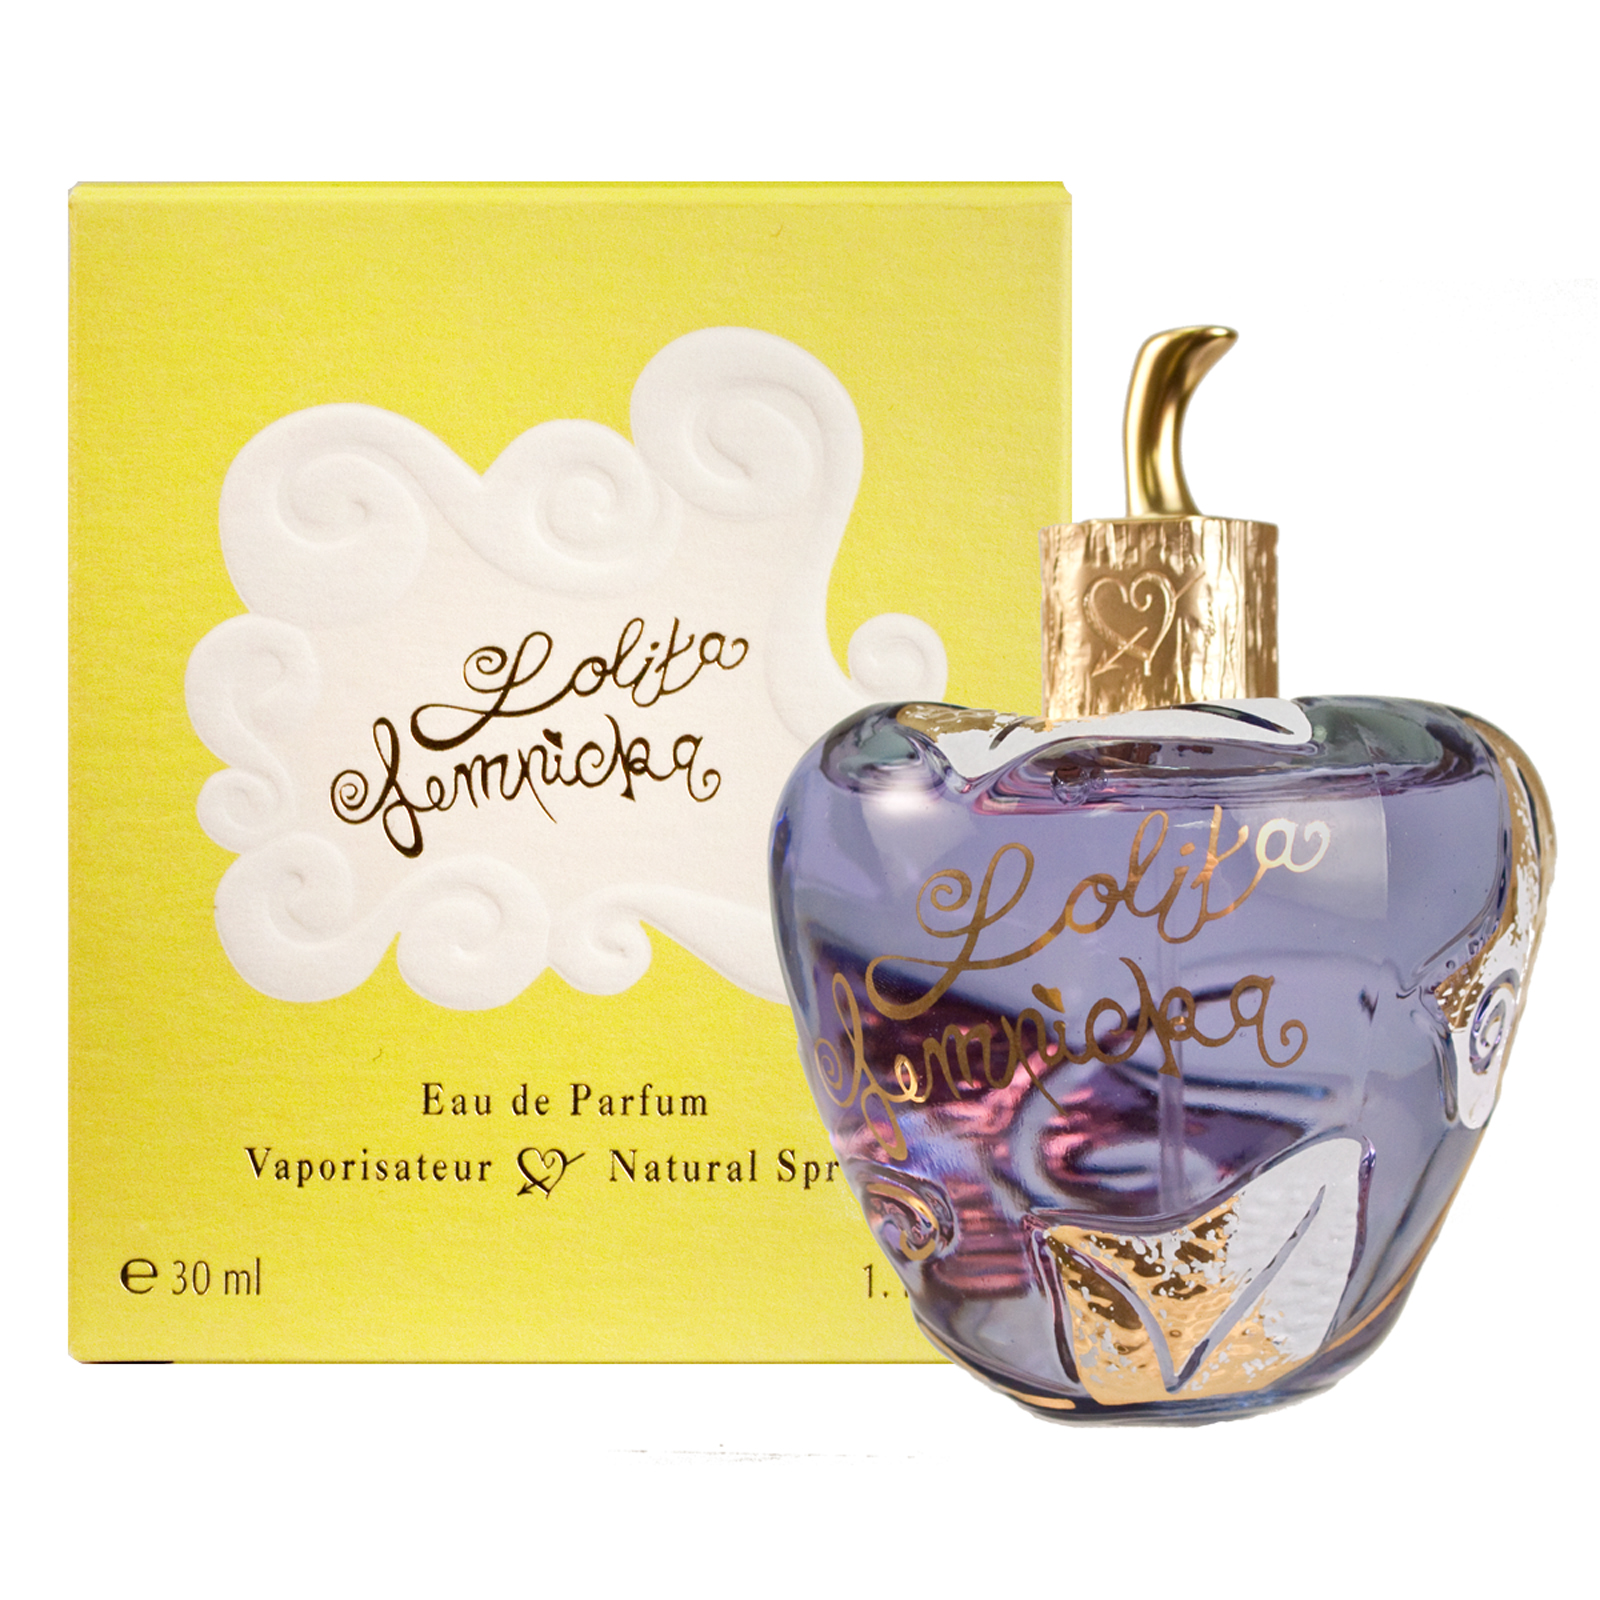 Lolita Lempicka For Women 1 oz Eau de Parfum Spray By